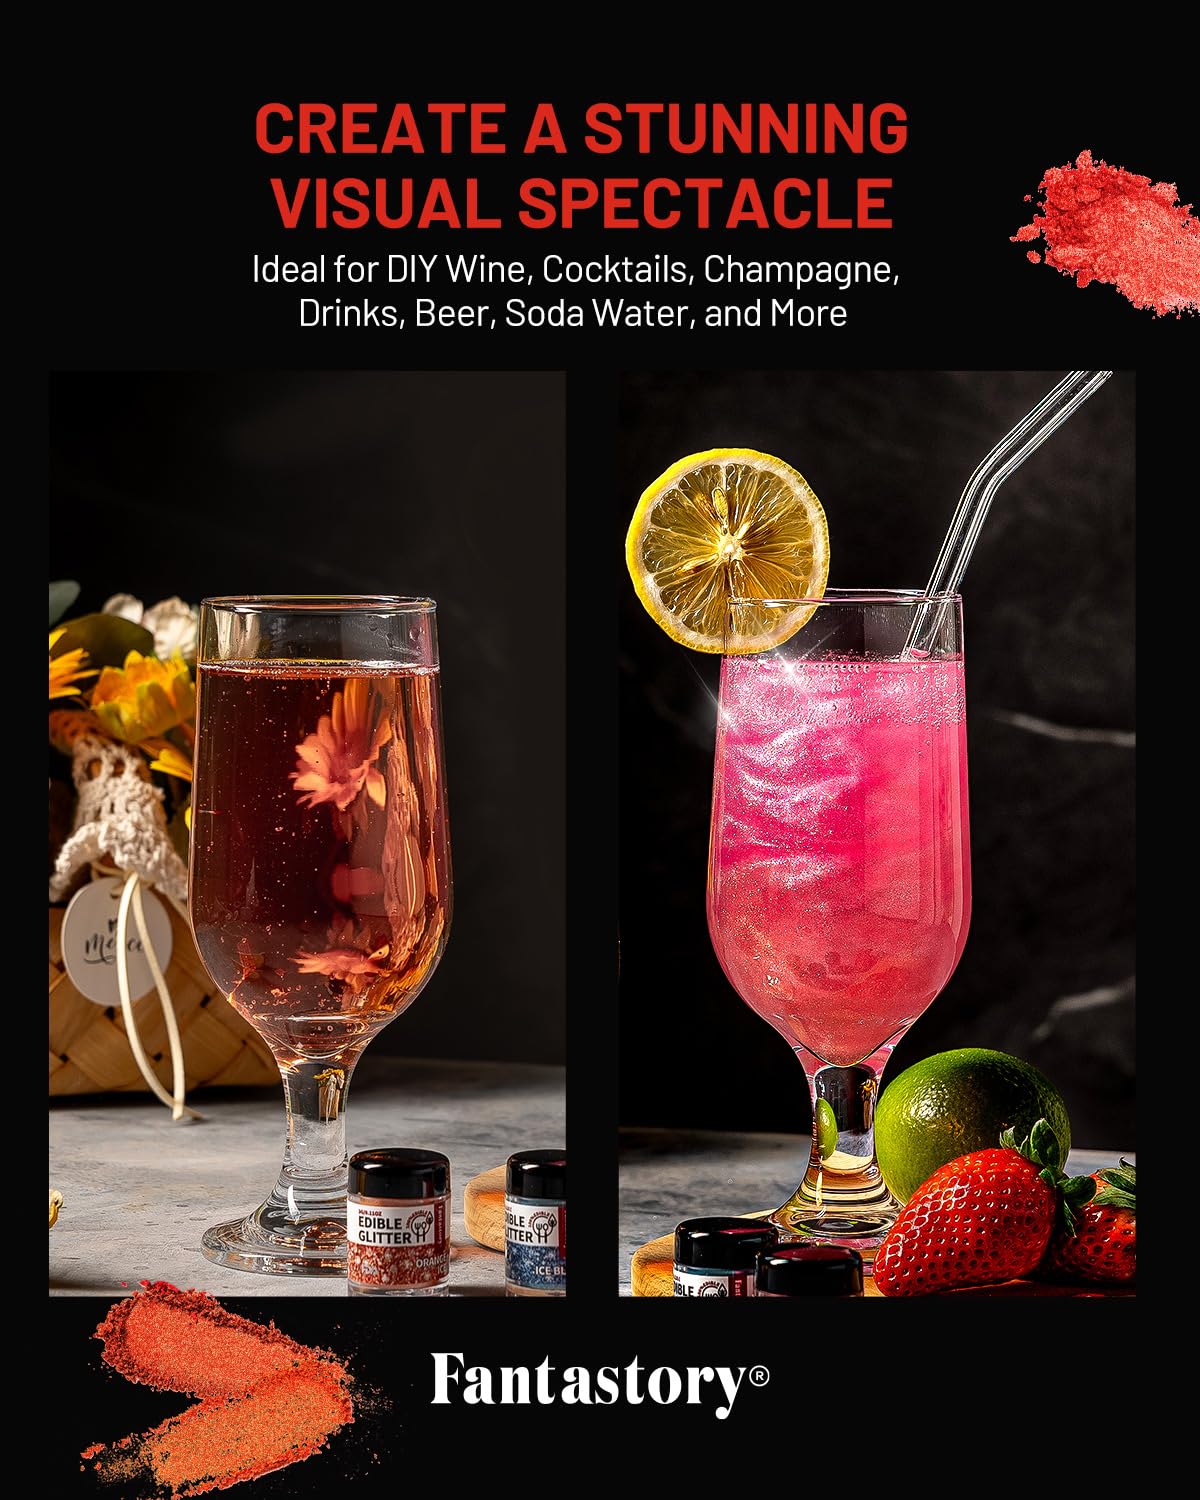 Fantastory Edible Glitter for Cocktails,Cakes,21 Colors(3g) Luster Dus –  WoodArtSupply